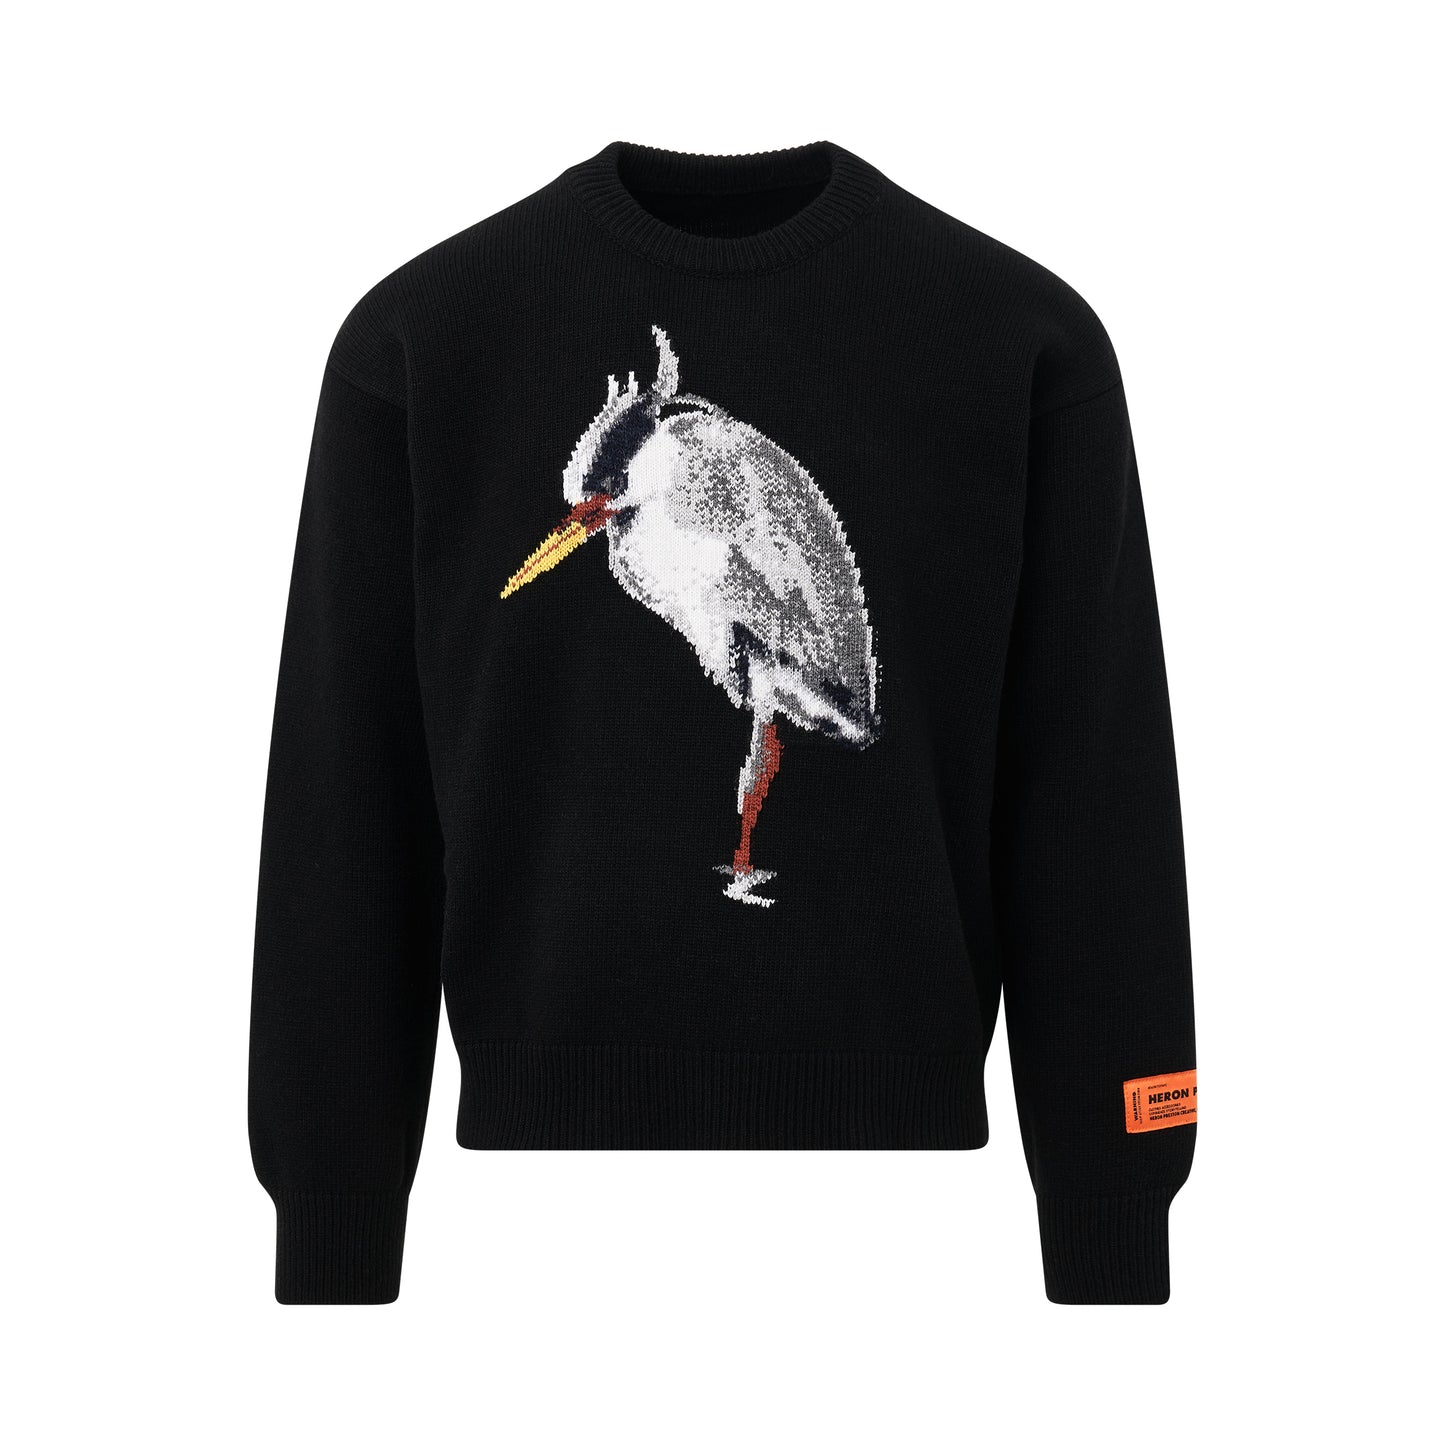 Heron Bird Knit Crewneck in Black/Grey